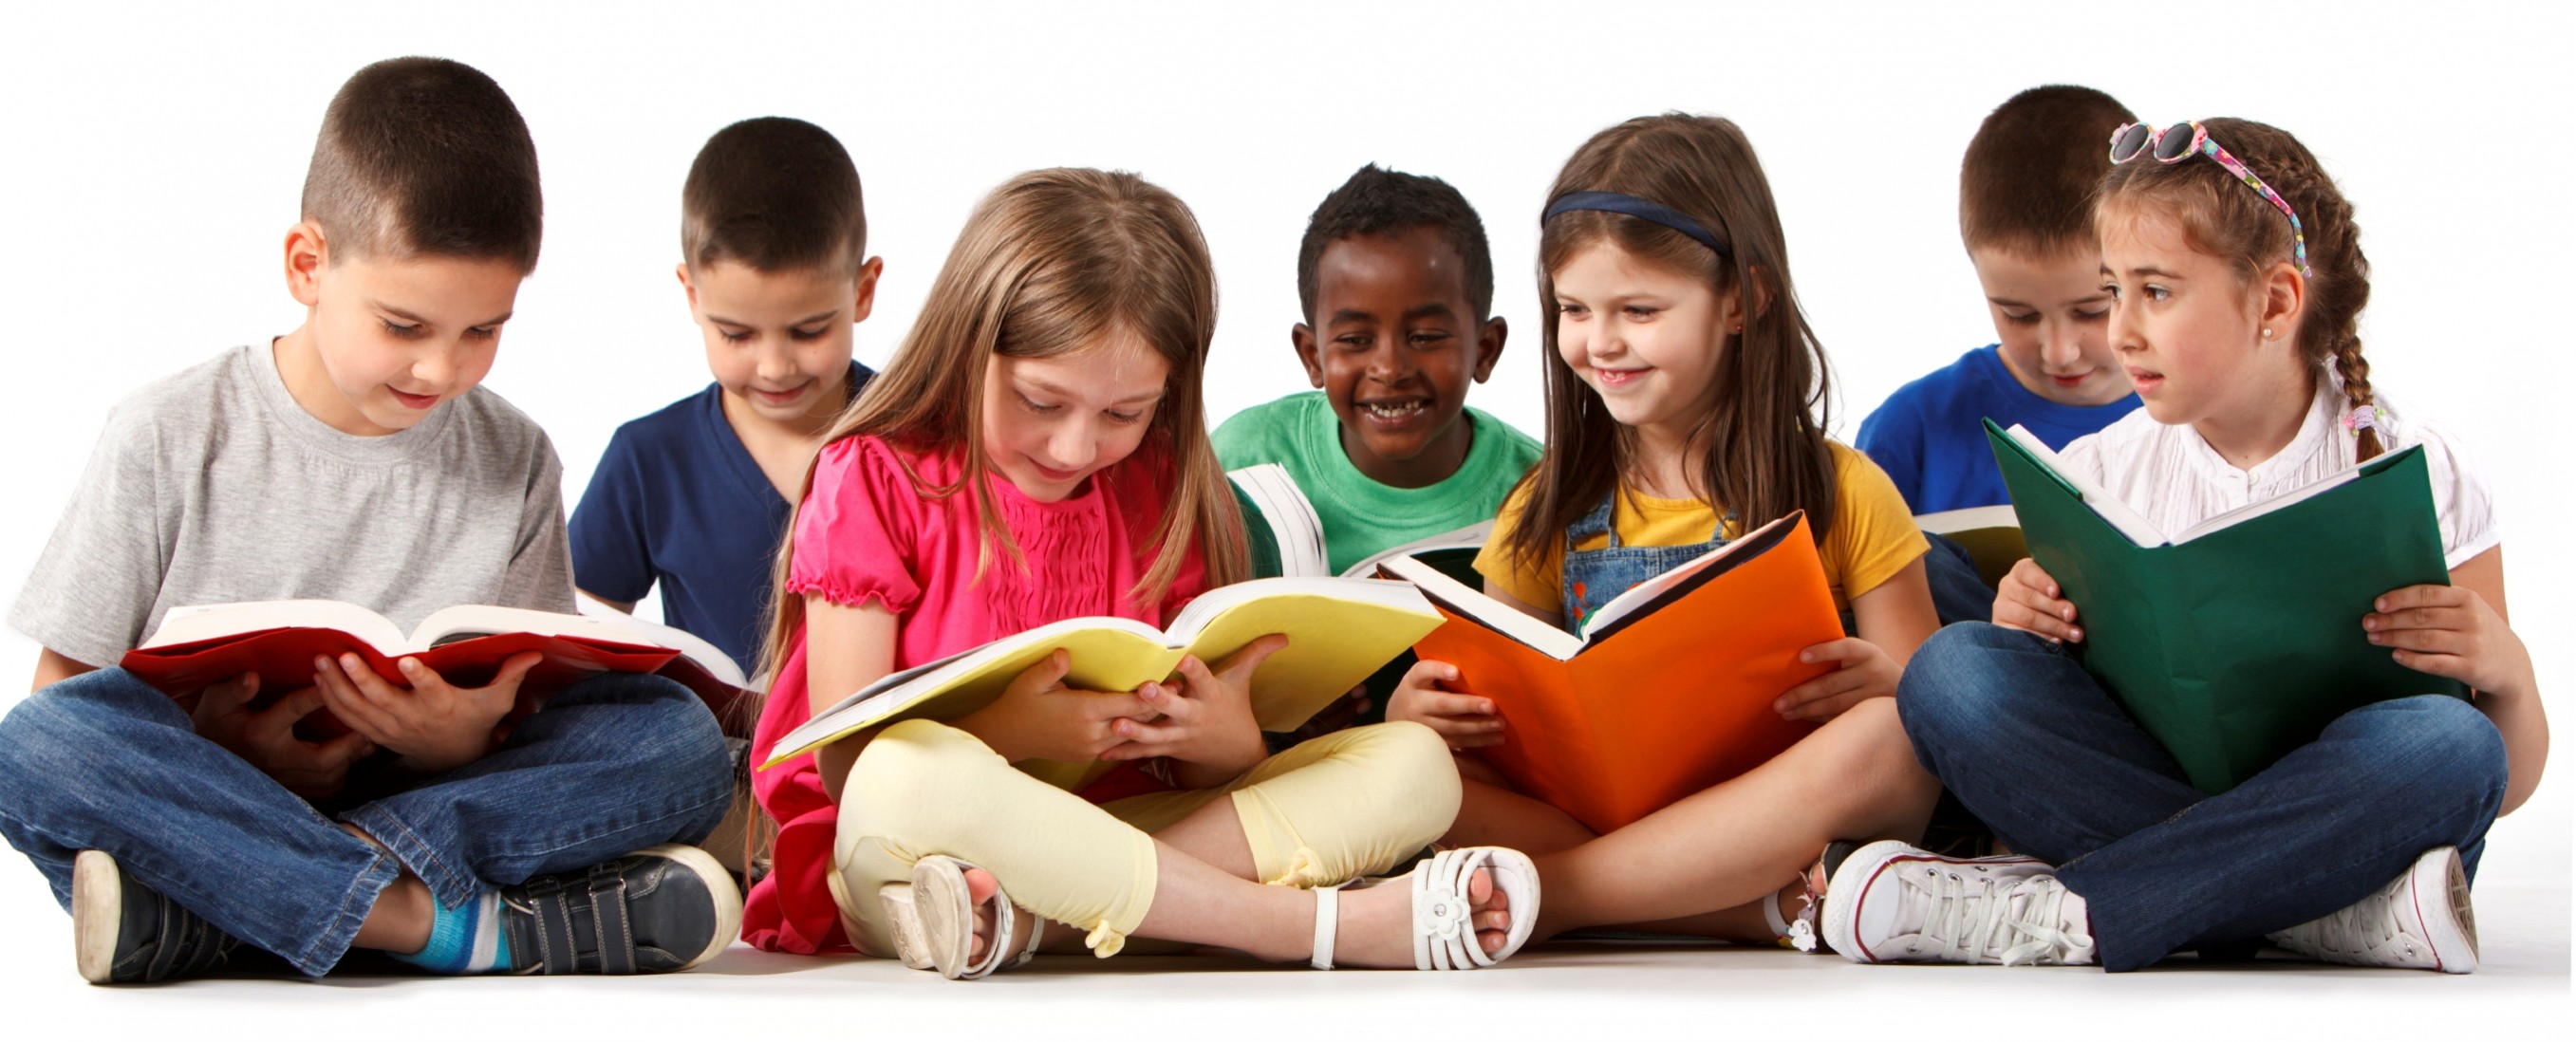 kids-Reading-Books-group-1